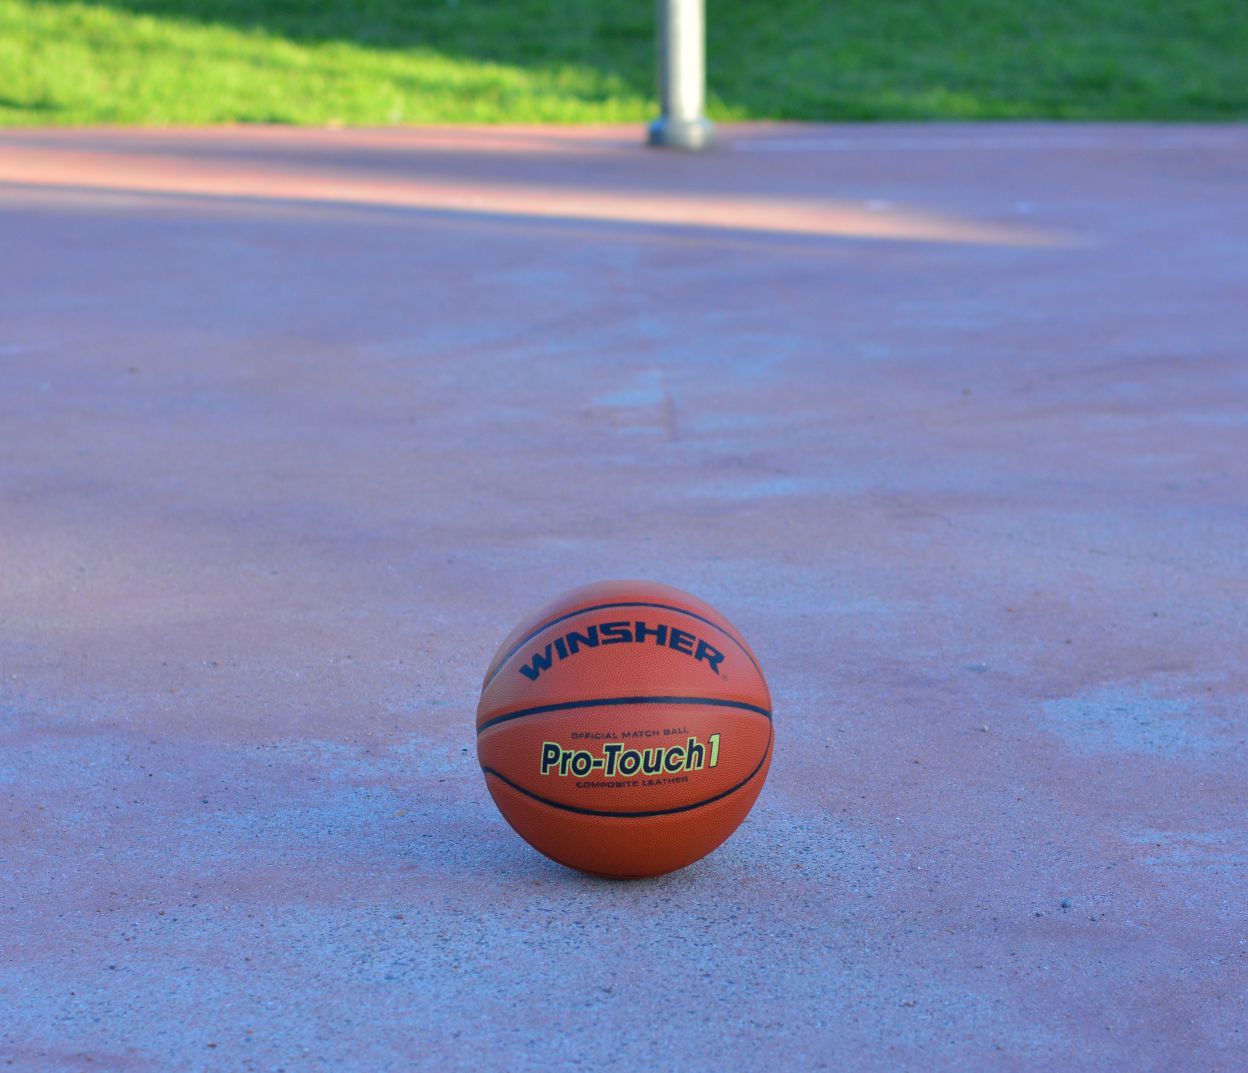 Winsher Sports Pro Touch 1 Basket Ball